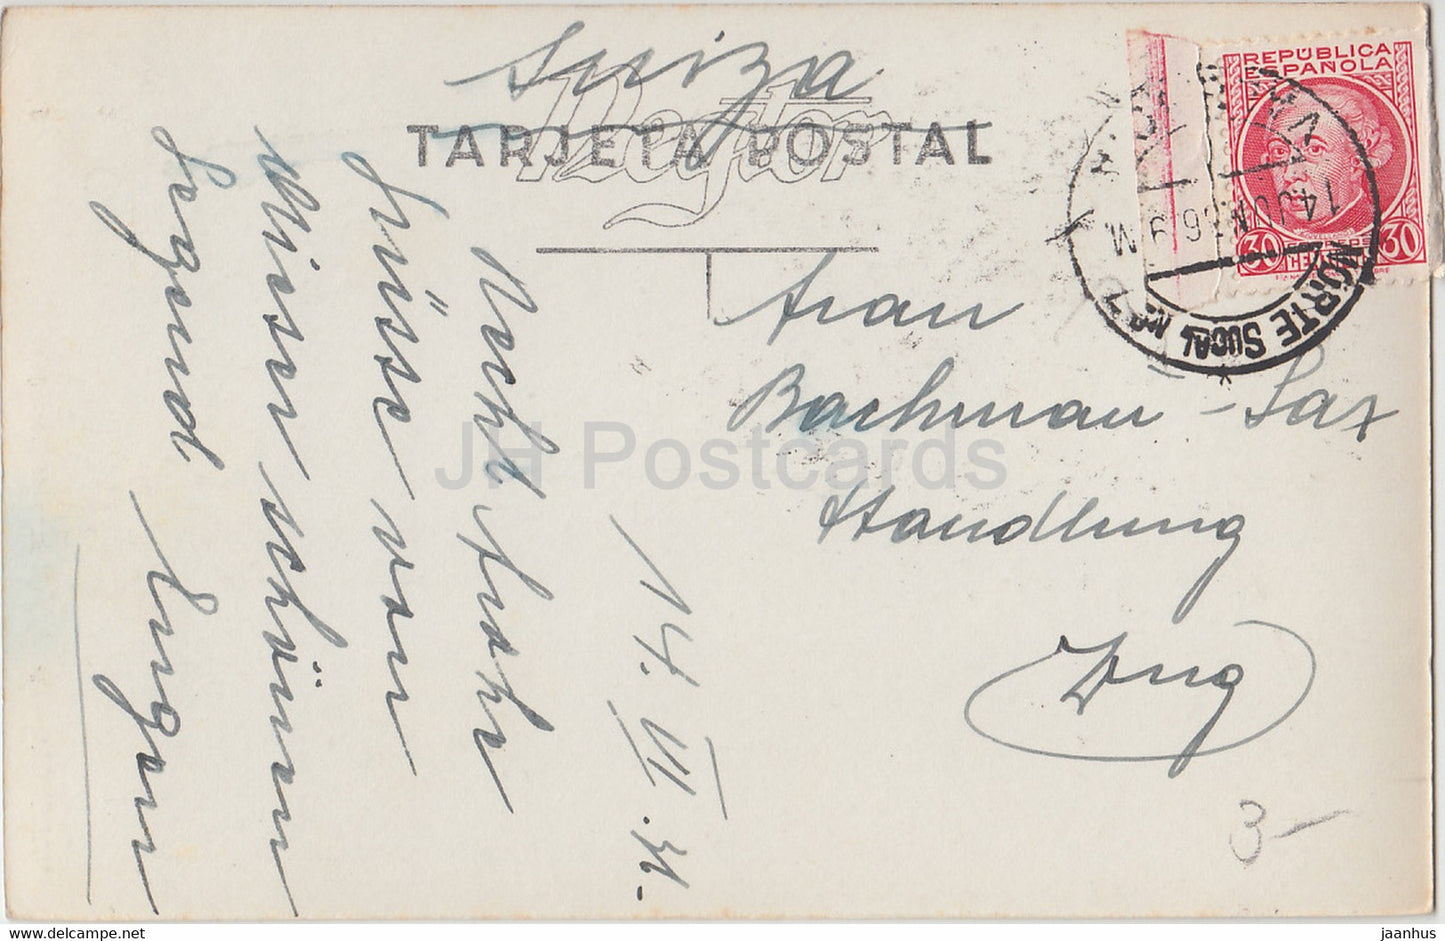 Valencia - Huerto de Naranjas - 153 - old postcard - 1936 - Spain - used